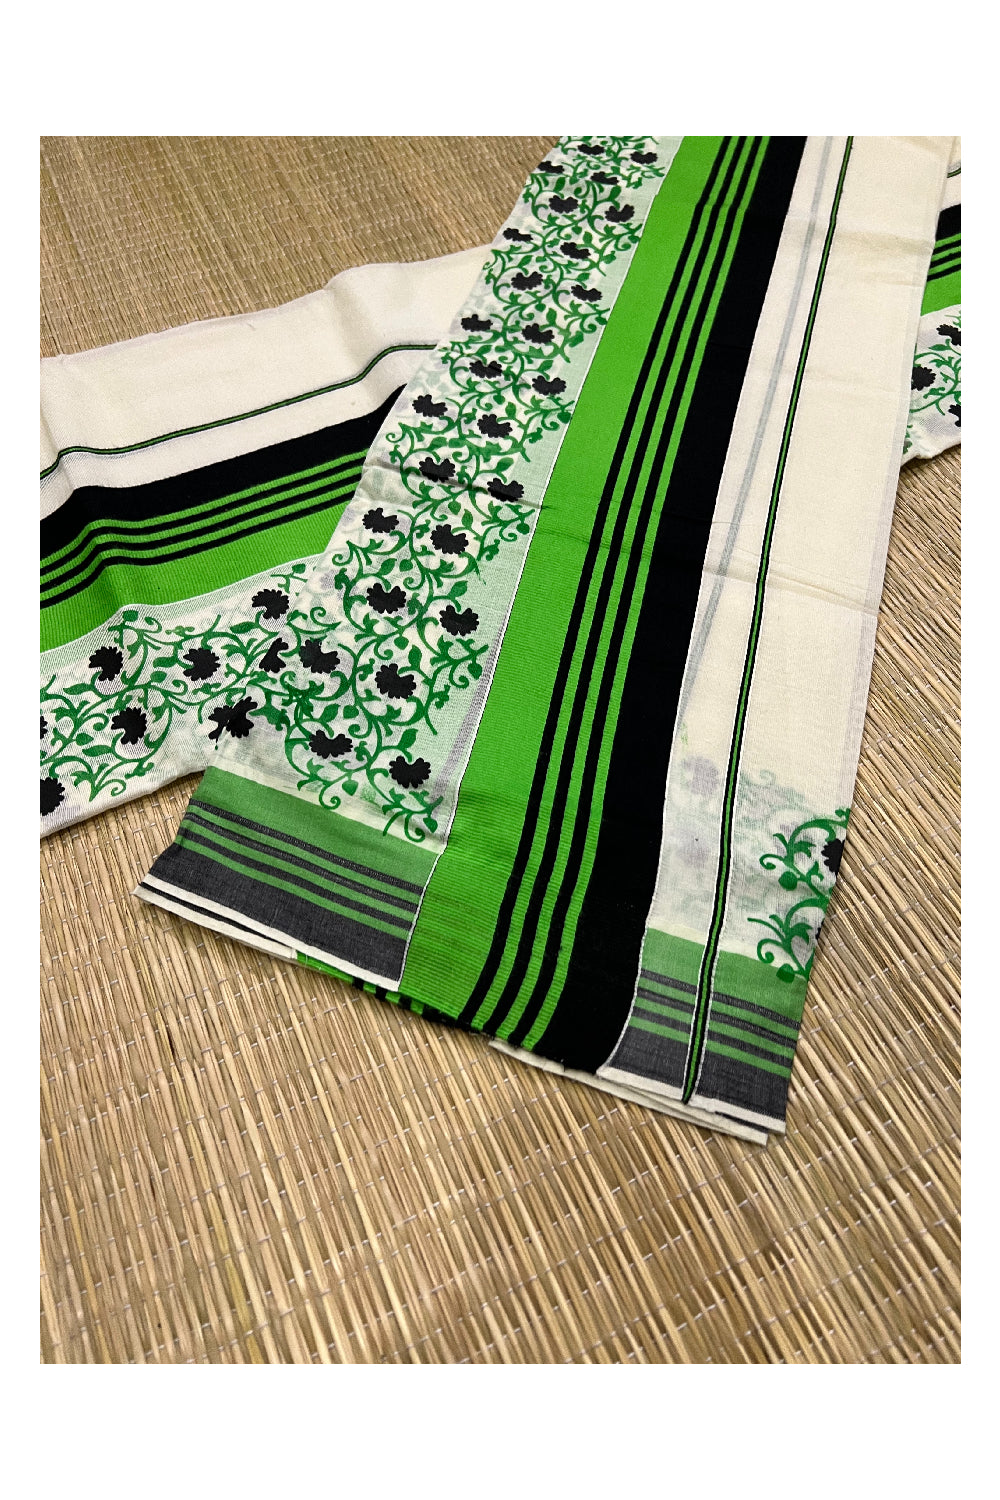 Kerala Cotton Set Mundu (Mundum Neriyathum) with Black Light Green Floral Block Prints on Border